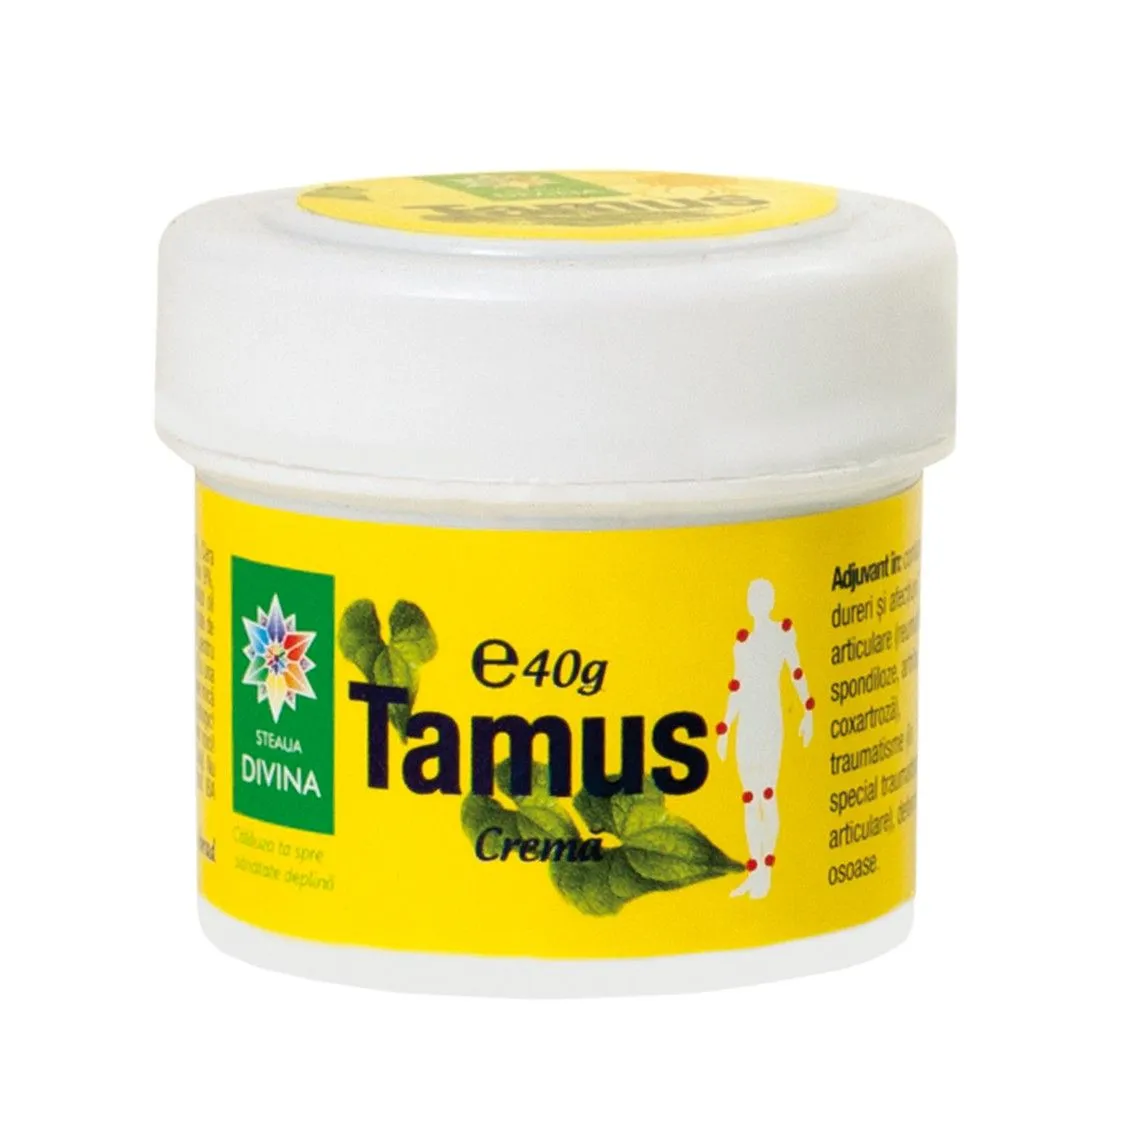 Crema Tamus, 40g, Santo Raphael